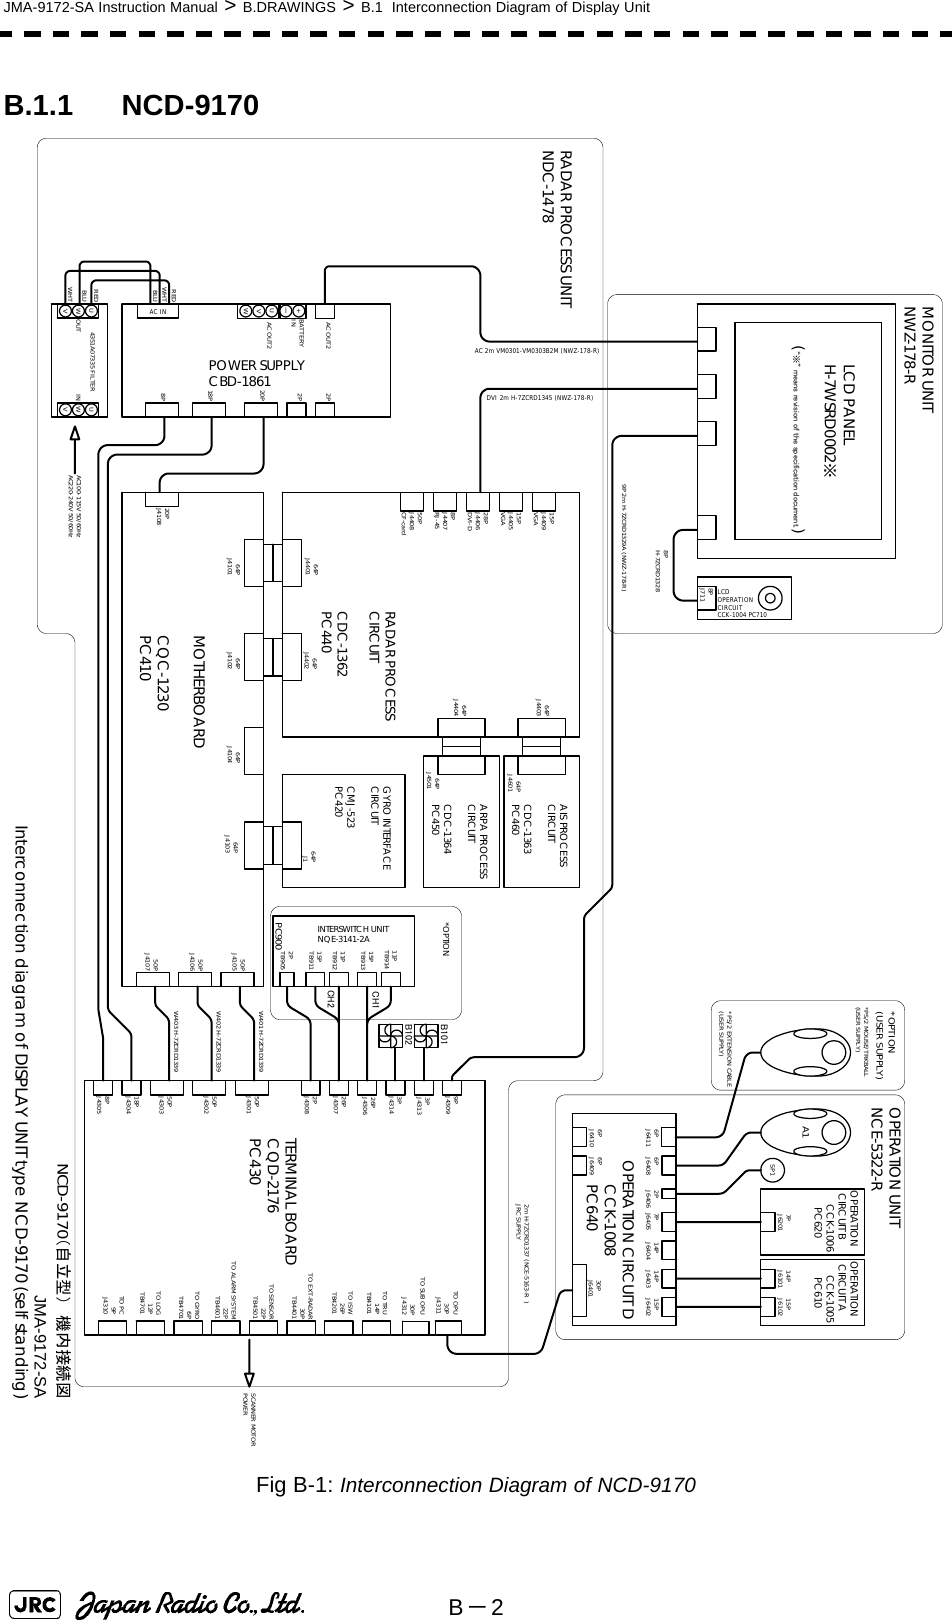 B－2JMA-9172-SA Instruction Manual &gt; B.DRAWINGS &gt; B.1  Interconnection Diagram of Display UnitB.1.1 NCD-9170Fig B-1: Interconnection Diagram of NCD-91702PJ430826PJ430726PJ430650PJ430118PJ43048PJ43053PJ43133PJ43149PJ430914PTB4101TO TRUTO ISW26PTB4201TO EXT-RADAR30PTB4401TO SENSOR22PTB4501TO ALARM SYSTEM22PTB4601TO GYRO6PTB4701TO LOG12PTB4701TO PC9PJ4310TERMINAL BOARDCQD-2176PC43050PJ430250PJ430330PJ4311TO OPU30PJ4312TO SUB OPU6PJ64116PJ6410 6PJ64096PJ6408 2PJ6406 7PJ6405 14PJ6404 14PJ6403 15PJ640230PJ6401OPERATION CIRCUIT D      CCK-1008      PC64014PJ6101 15PJ6102OPERATION  CIRCUIT A     CCK-1005      PC6107PJ6201OPERATION  CIRCUIT B     CCK-1006      PC620SP1A1*PS/2 EXTENSION CABLE(USER SUPPLY)OPERATION UNITNCE-5322-R2m H-7ZCRD1337 (NCE-5163-R  ) JRC SUPPLYB101B102PC90011PTB91415PTB91311PTB91215PTB9112PTB905INTERSWITCH UNITNQE-3141-2ACH1CH250PJ410550PJ410650PJ4107*OPTIONW401 H-7ZCRD1339W402 H-7ZCRD1339W403 H-7ZCRD133964PJ410364PJ410464PJ410264PJ410164PJ4401 64PJ4402 64PJ1GYRO INTERFACECIRCUITCMJ-523PC420RADAR PROCESSCIRCUITCDC-1362PC440MOTHERBOARDCQC-1230PC41064PJ440364PJ4404AIS PROCESSCIRCUITCDC-1363PC46064PJ460164PJ4501ARPA PROCESSCIRCUITCDC-1364PC45015PJ4409VGA15PJ4405VGA28PJ4406DVI-D8PJ4407RJ-4550PJ4408CF-cardLCDOPERATIONCIRCUITCCK-1004 PC7108PJ711MONITOR UNITNWZ-178-RLCD PANELH-7WSRD0002※8PH-7ZCRD13289P 2m H-7ZCRD1329A (NWZ-178-R) DVI 2m H-7ZCRD1345 (NWZ-178-R) 20PJ41088PPOWER SUPPLYCBD-186118P20P*PS/2 MOUSE/TRKBALL(USER SUPPLY)*OPTION(USER SUPPLY)2P2PAC OUT2+ーUVWBATTERYINAC OUT2AC INUWVUWV4351A07335 FILTERINOUTREDWHTBLUREDWHTBLUAC 2m VM0301-VM0303B2M (NWZ-178-R)AC100-115V 50/60HzAC220-240V 50/60Hz NCD-9170（自立型）　機内接続図Interconnection diagram of DISPLAY UNIT type NCD-9170 (self standing)JMA-9172-SARADAR PROCESS UNITNDC-1478SCANNER MOTORPOWER (“※” means revision of the specification document.)